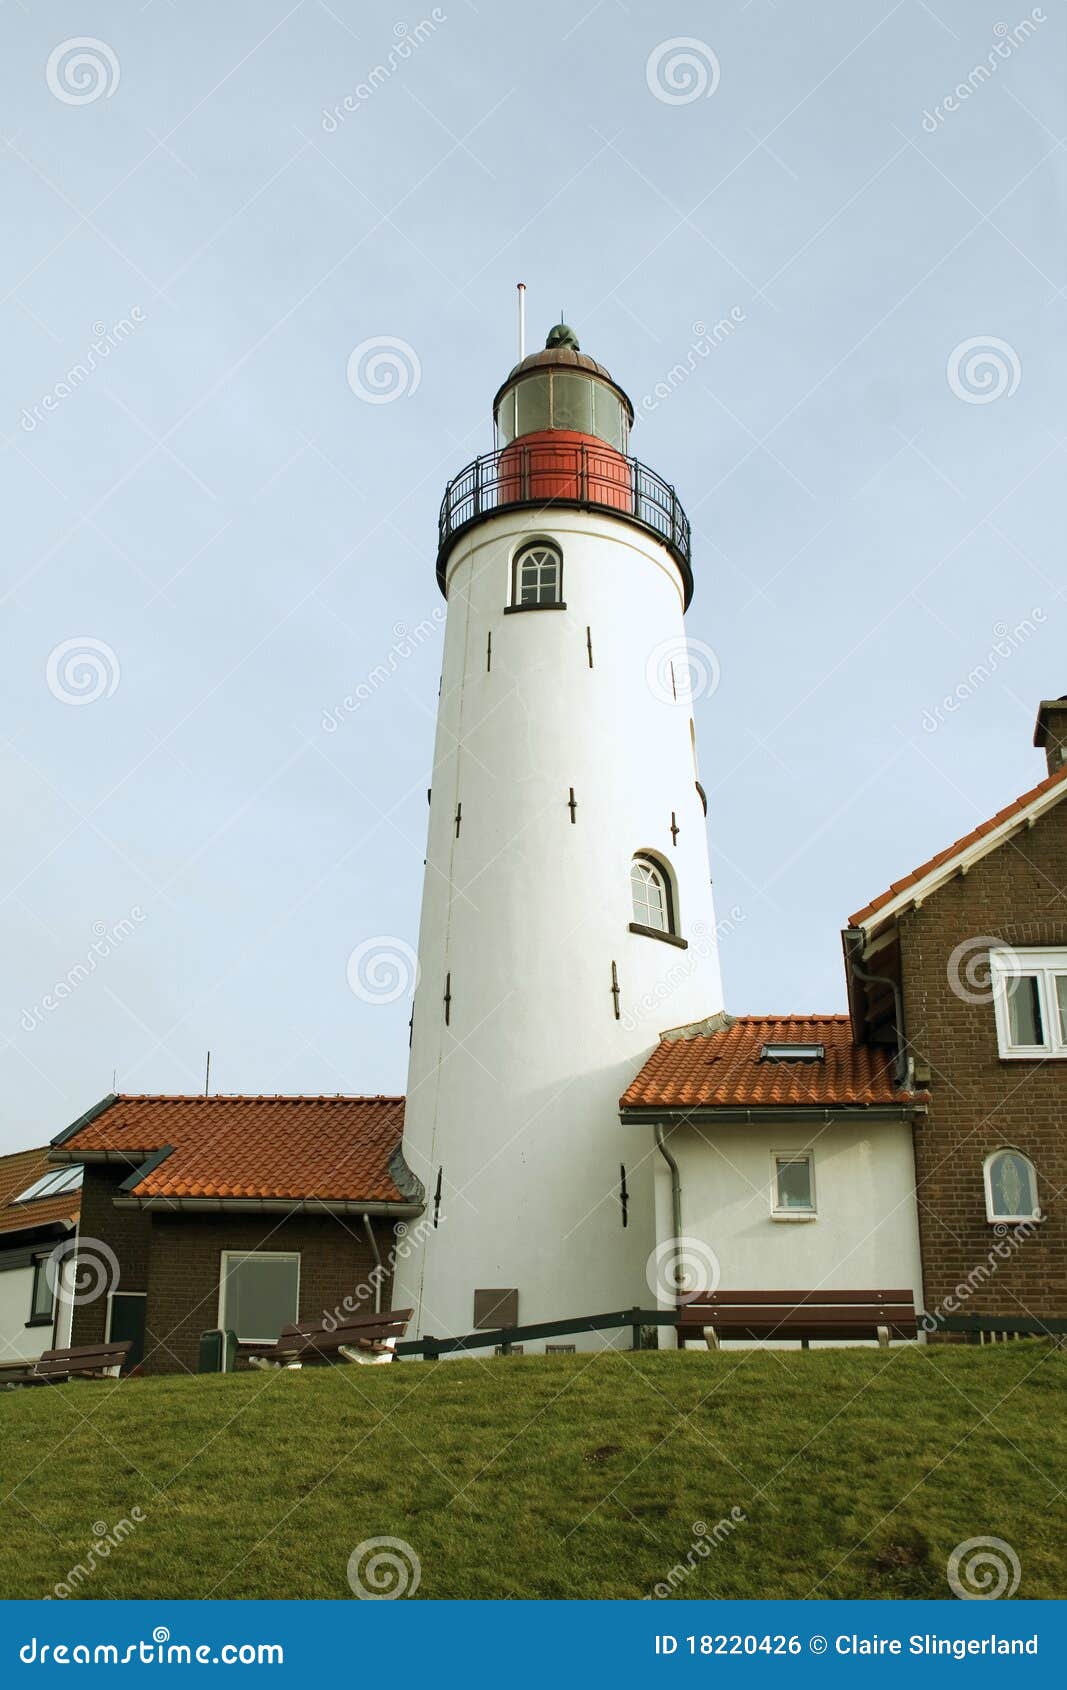 lighthouse of urk